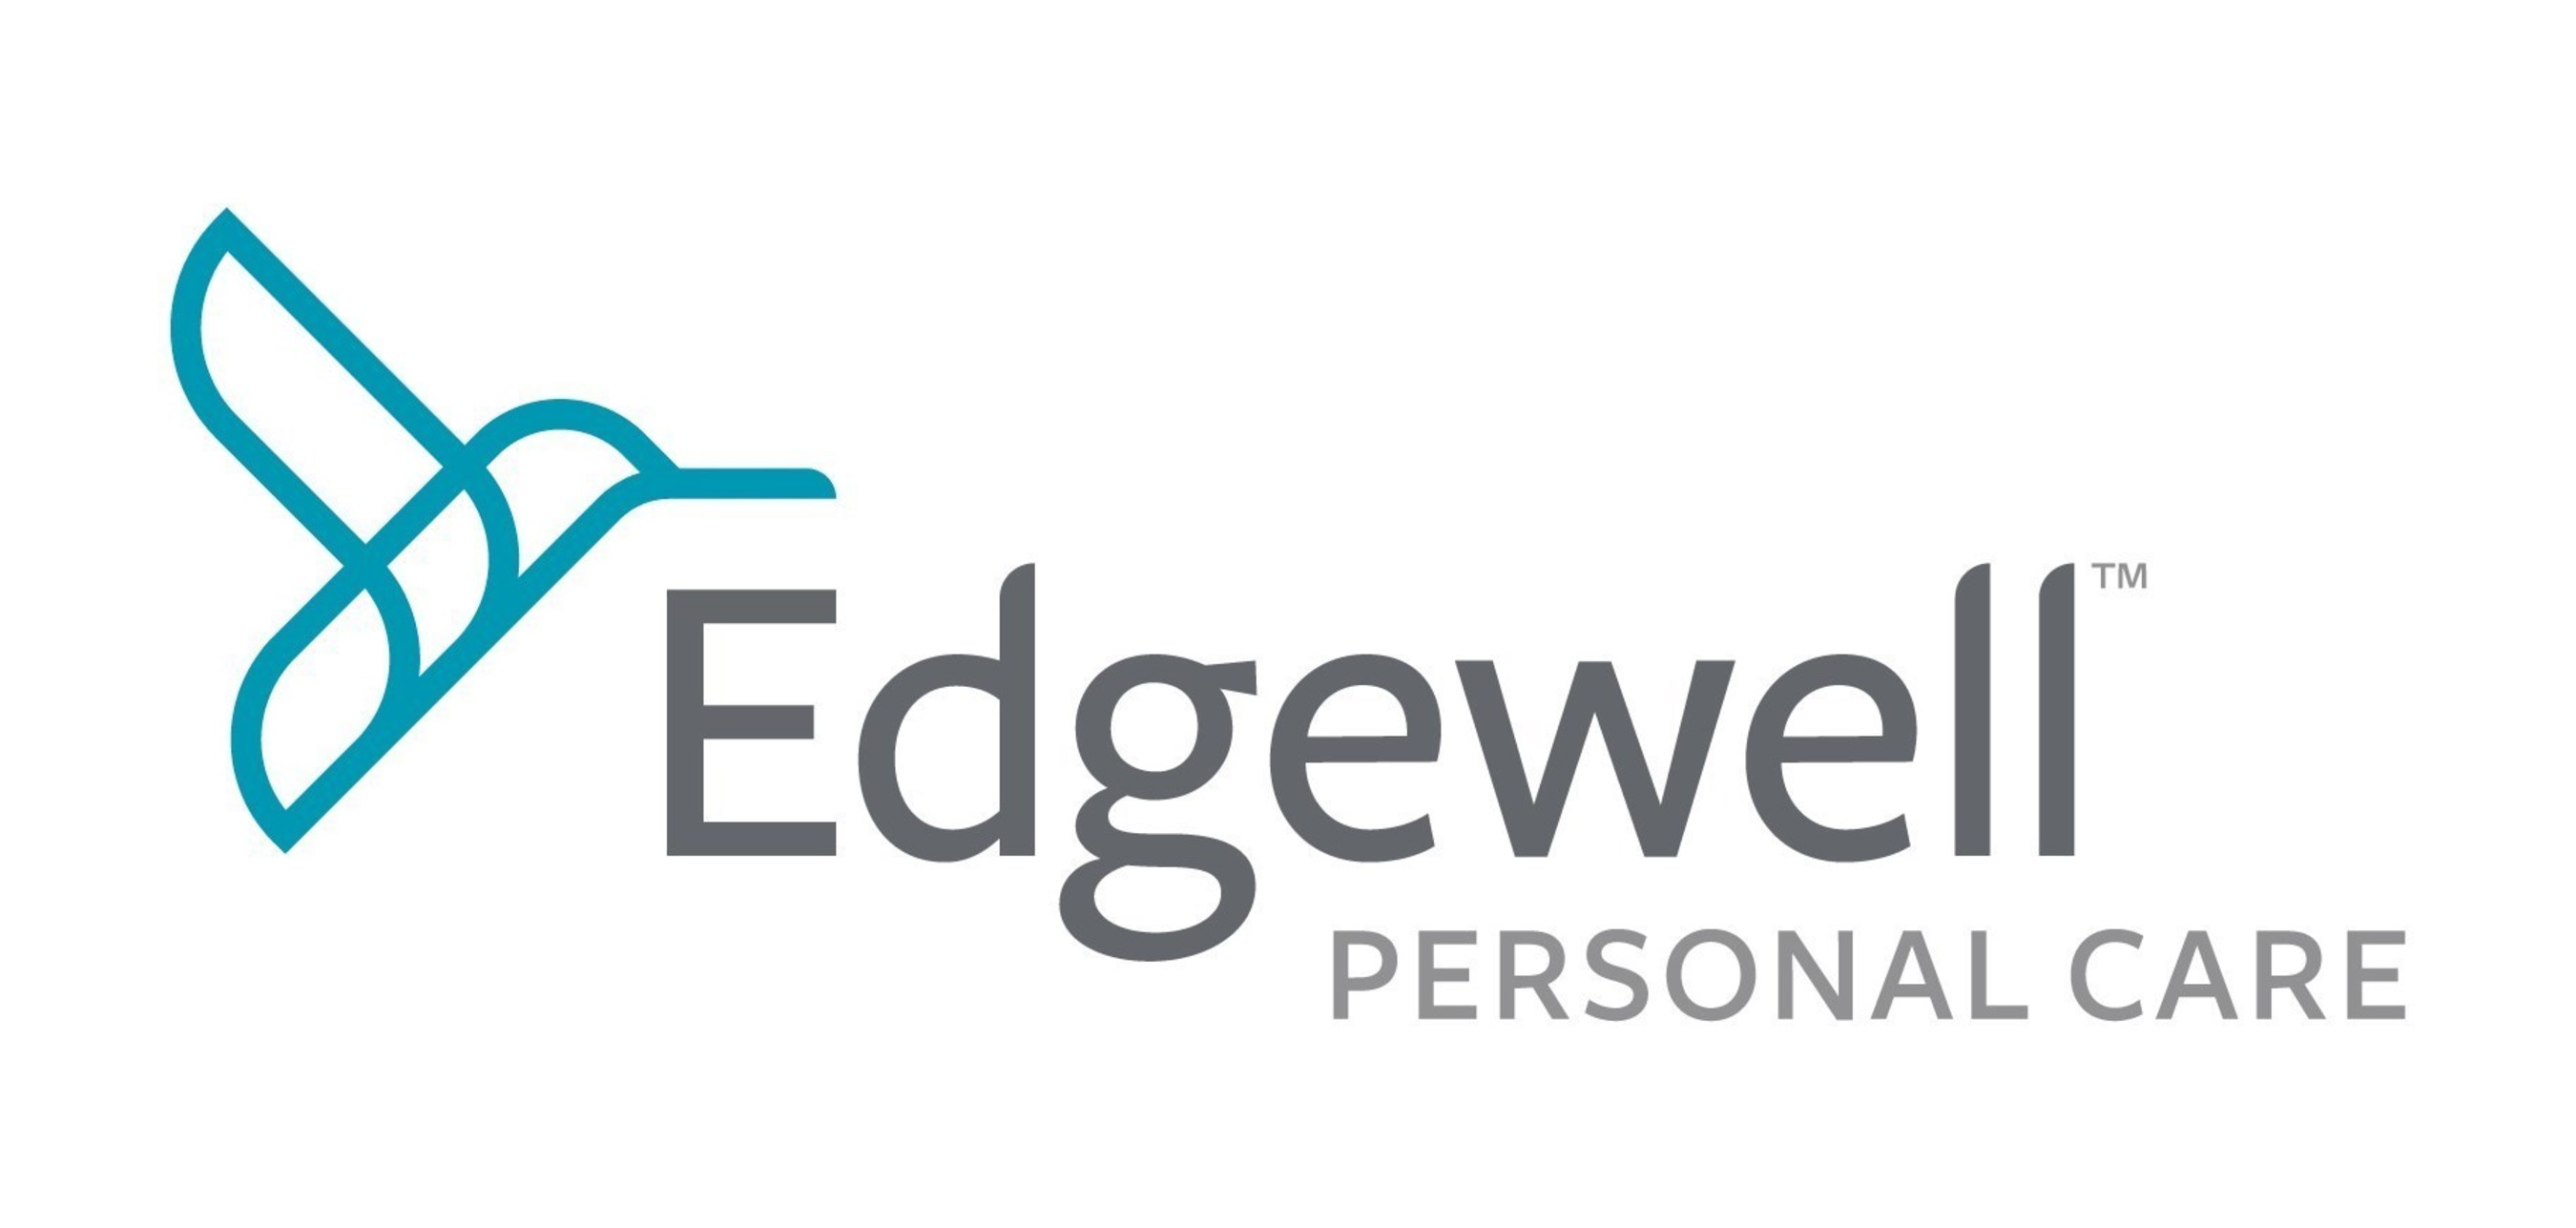 Edgewell Personal Care Company logo